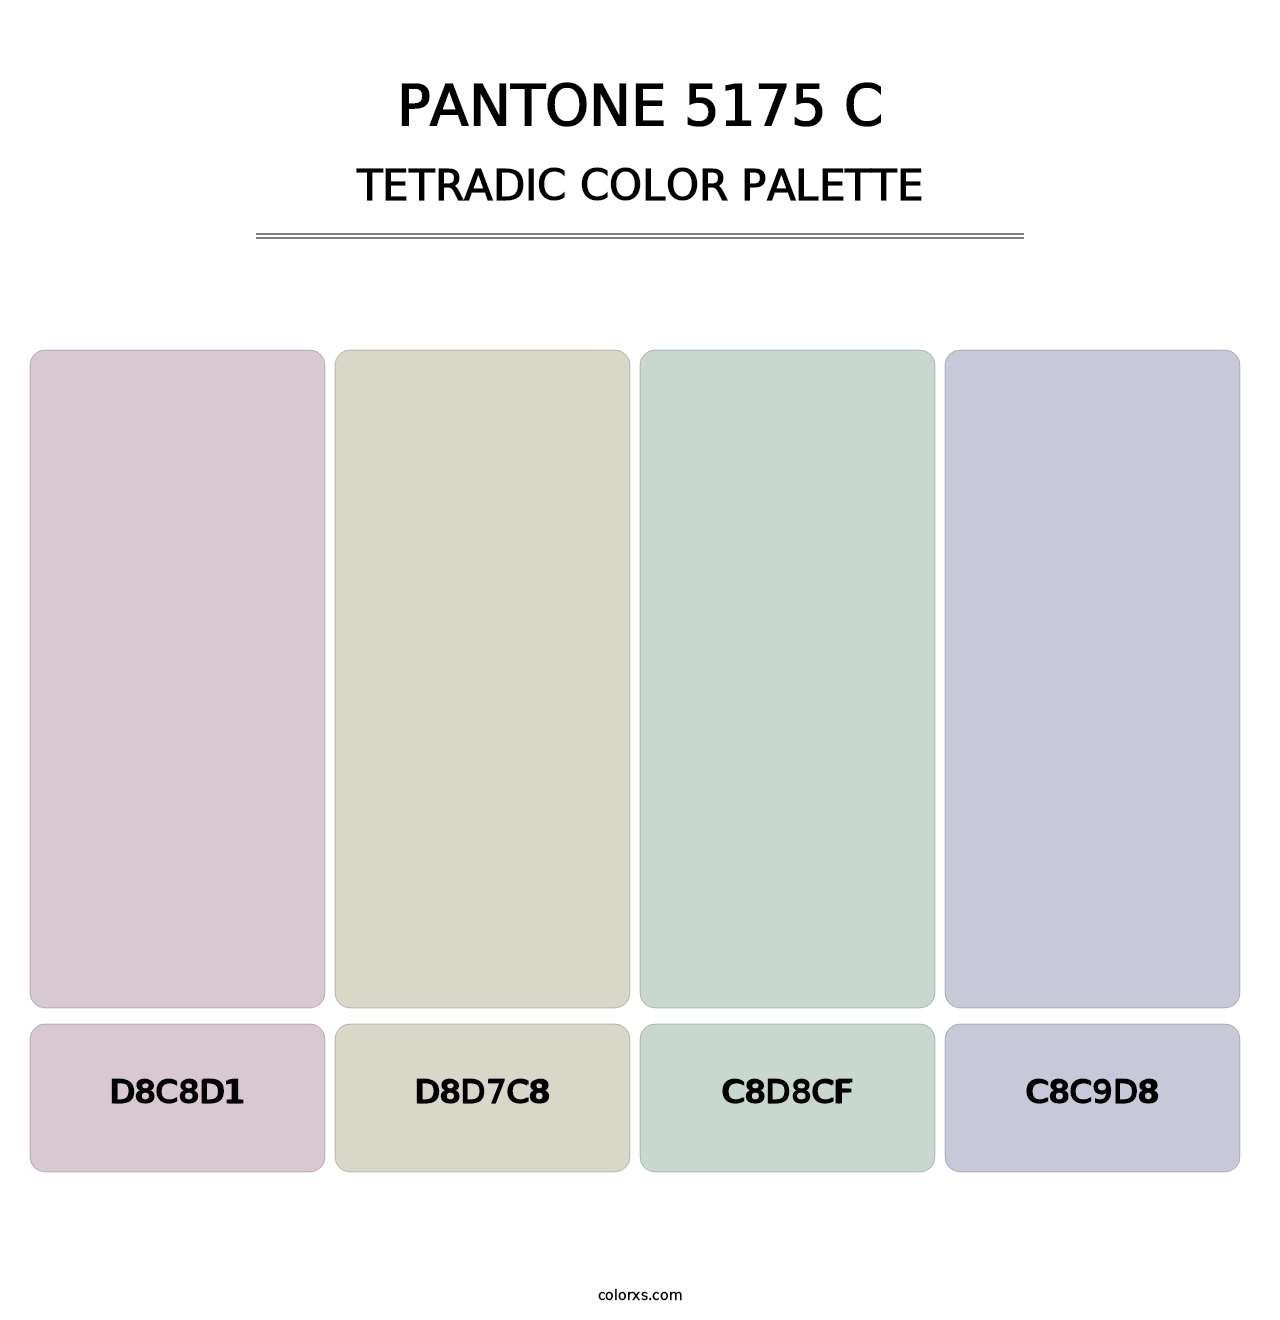 PANTONE 5175 C - Tetradic Color Palette